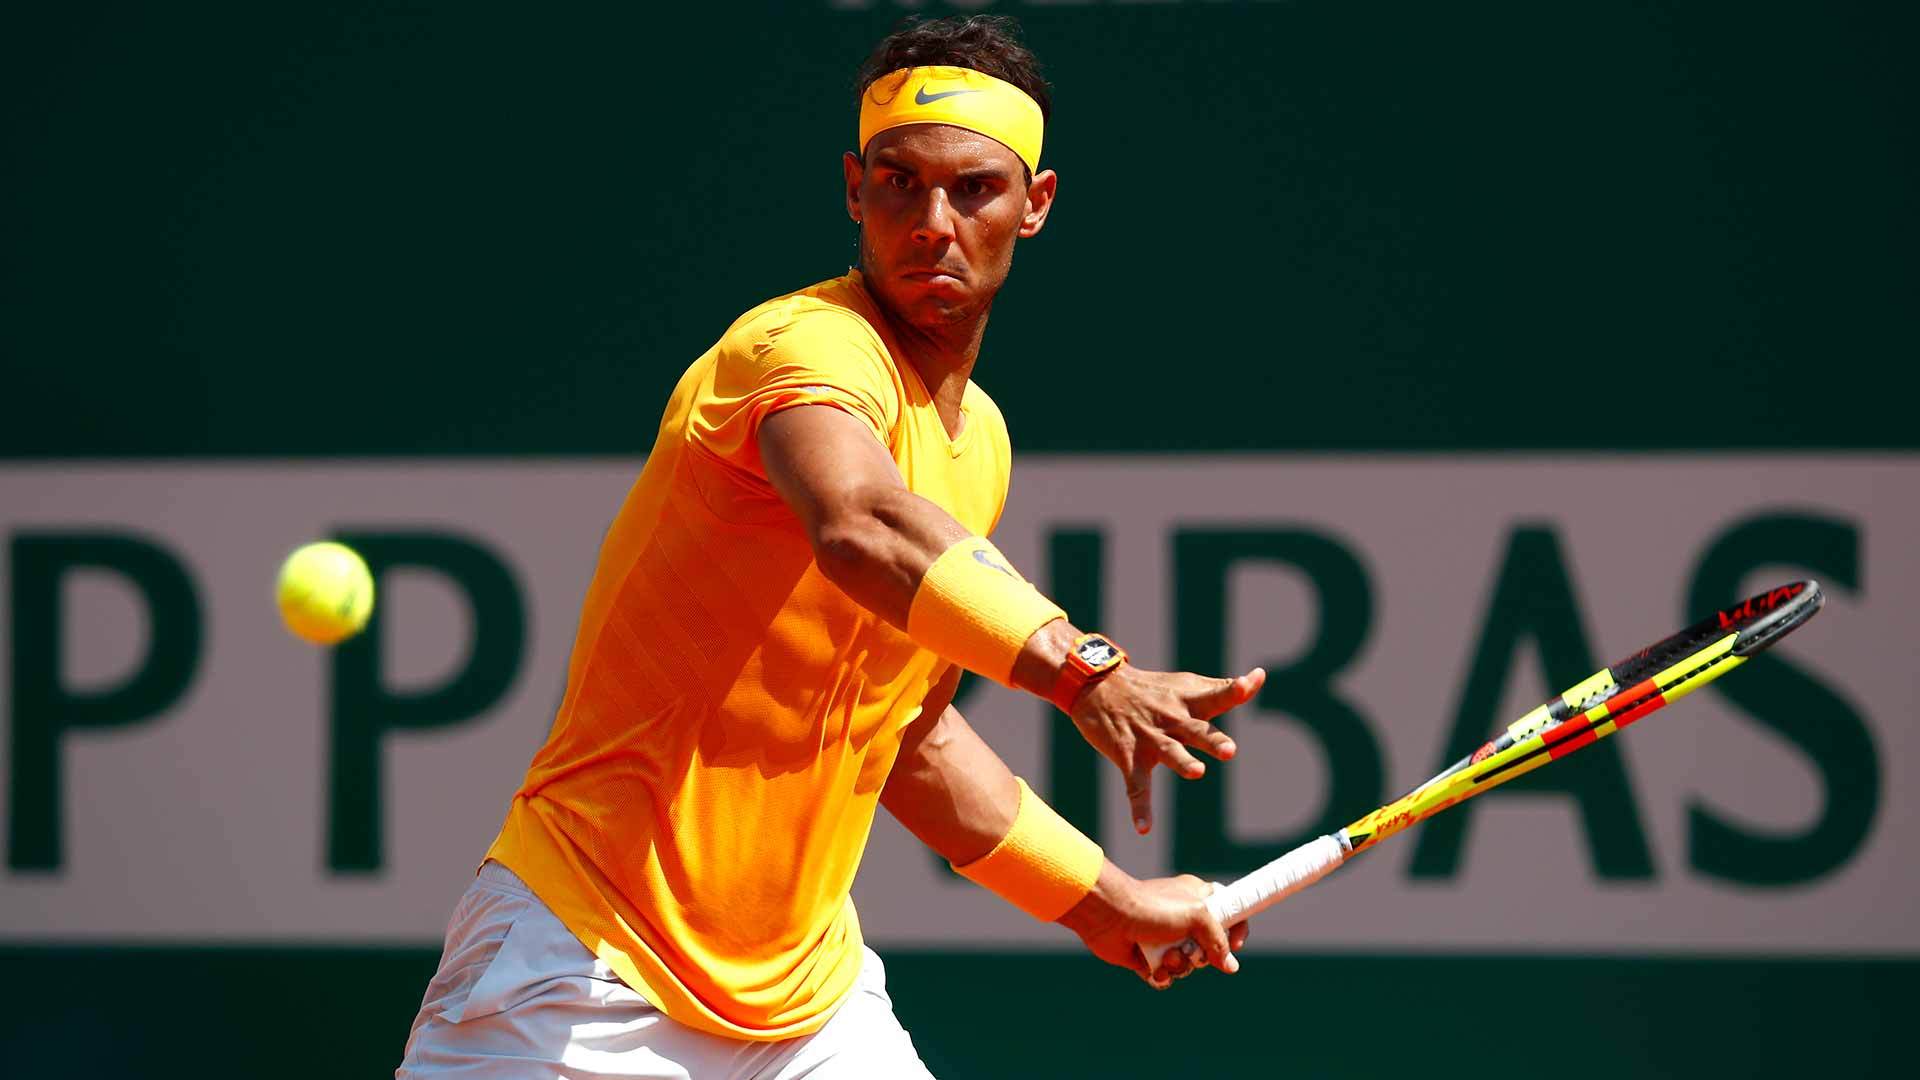 Rafael Nadal Photo By - Nadal Monte Carlo 2018 Final , HD Wallpaper & Backgrounds